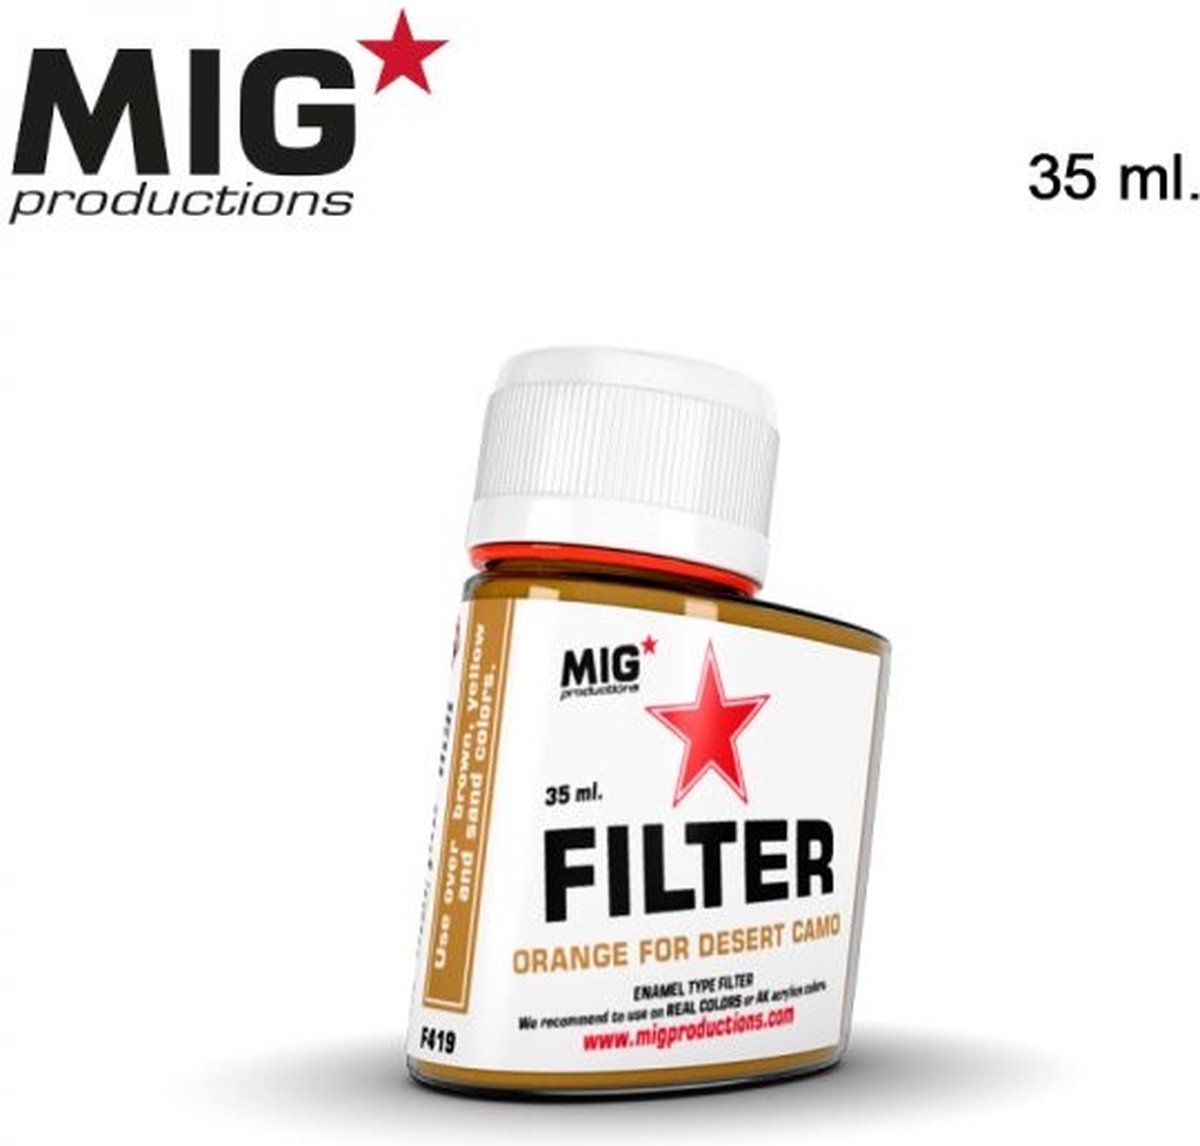 MIG Productions - F419 - Orange Filter for Desert Camo - 35ml -